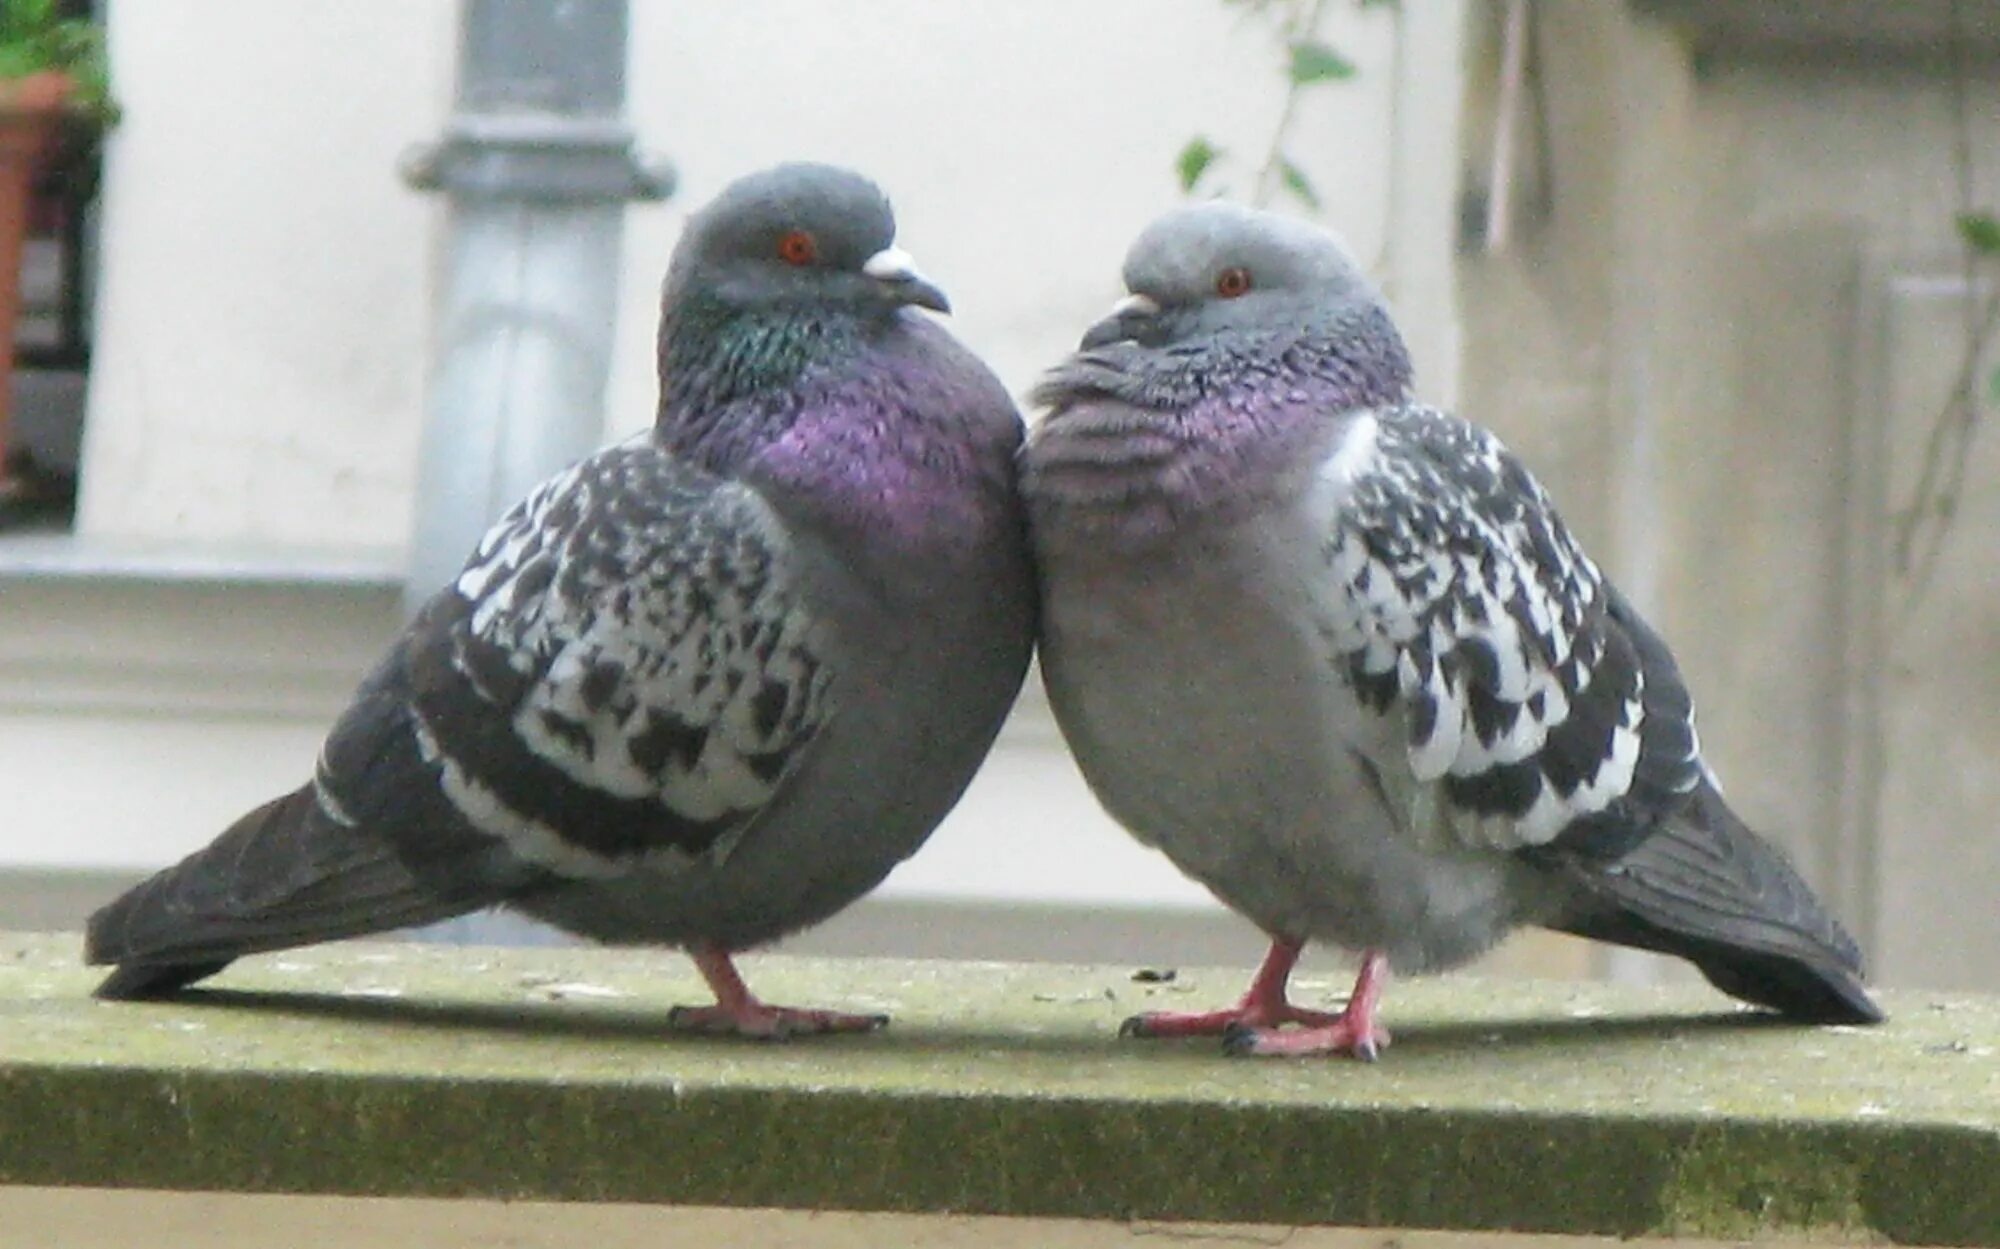 They like birds. Любовь и голуби. The Pigeon. Pigeons can't fart..